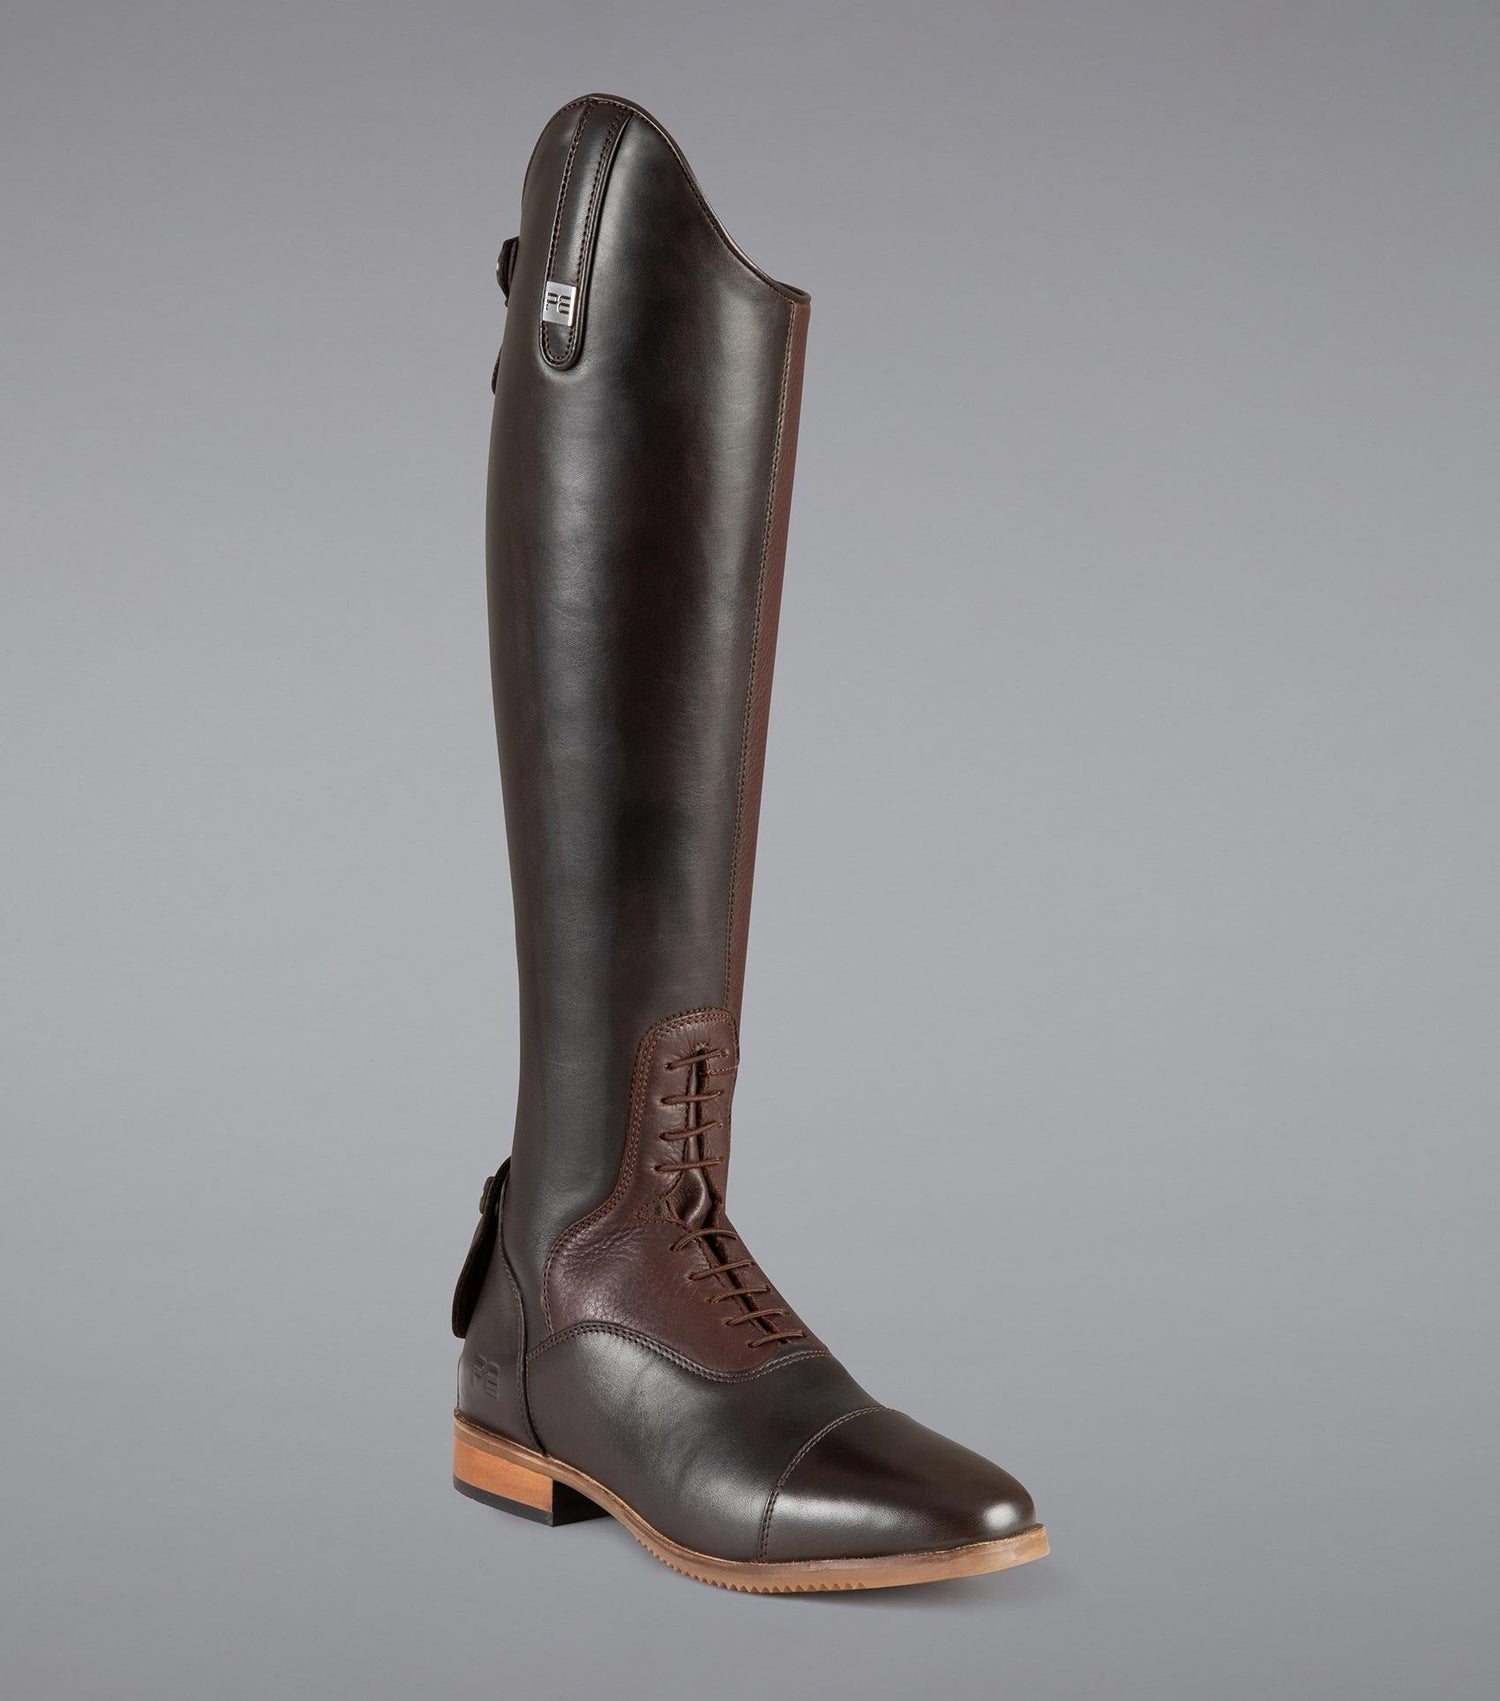 Description:Bilancio Ladies Leather Field Tall Riding Boot_Colour:Brown_Position:1